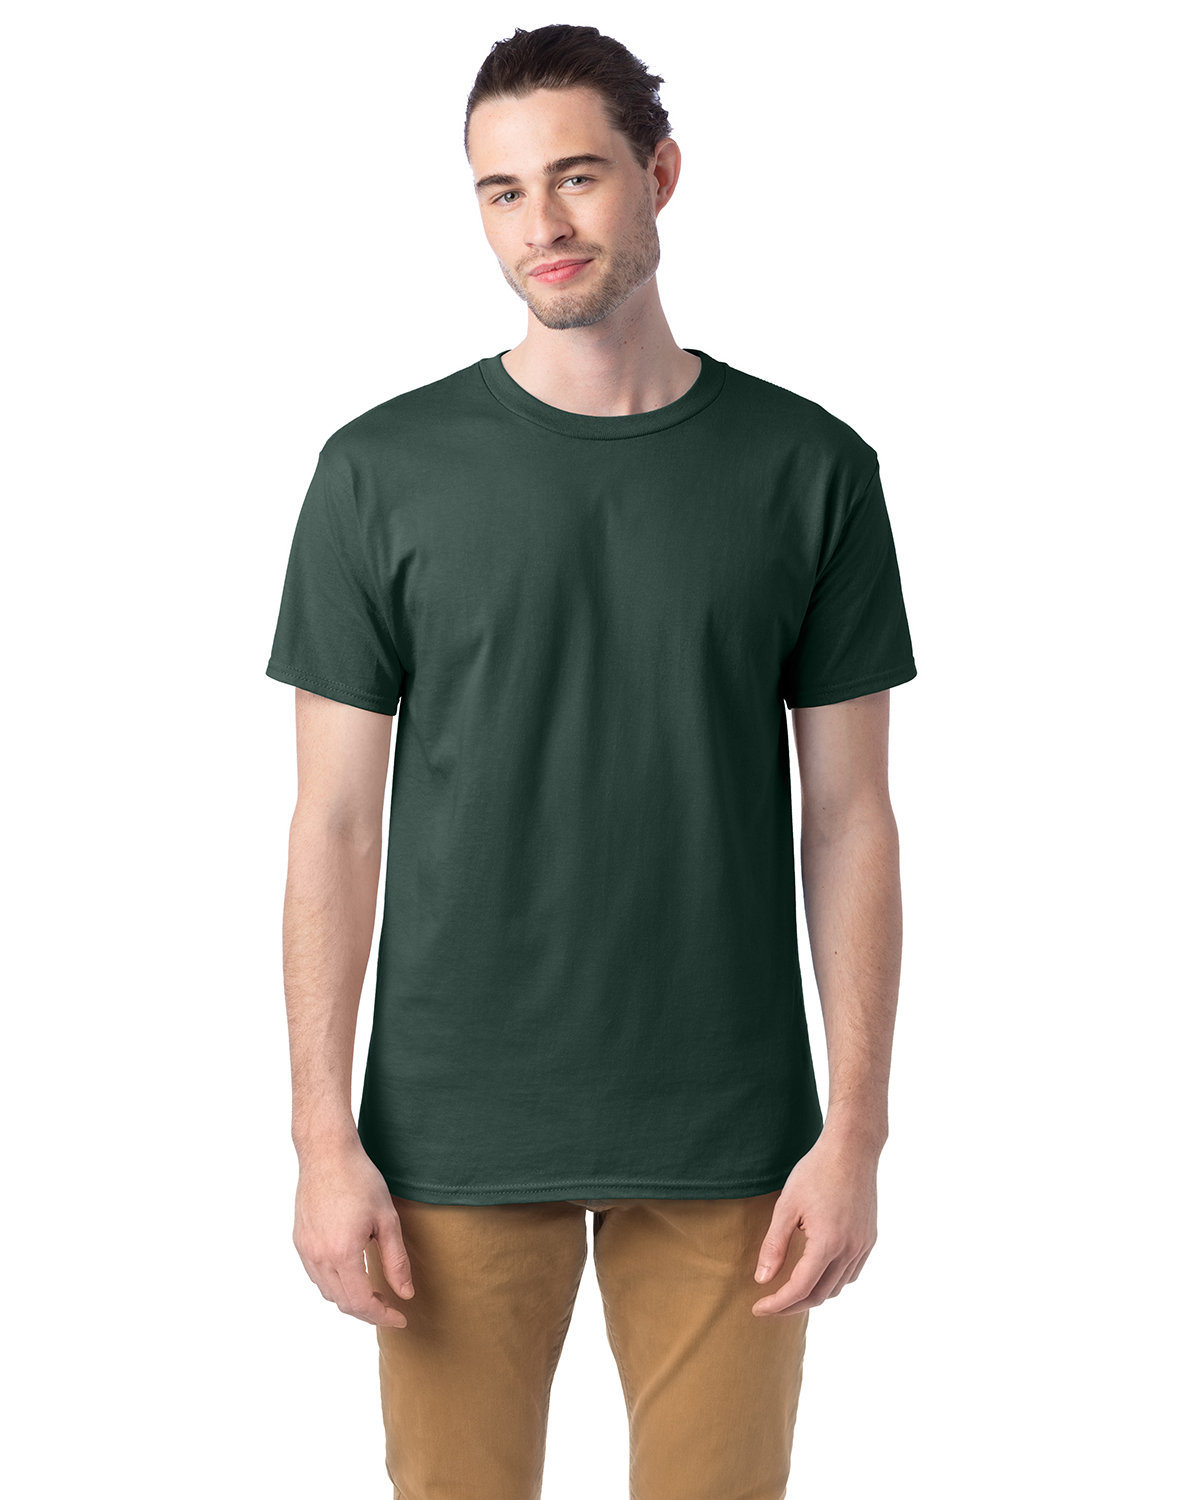 Hanes Adult Essential-T T-Shirt ATHLETIC DK GREN 